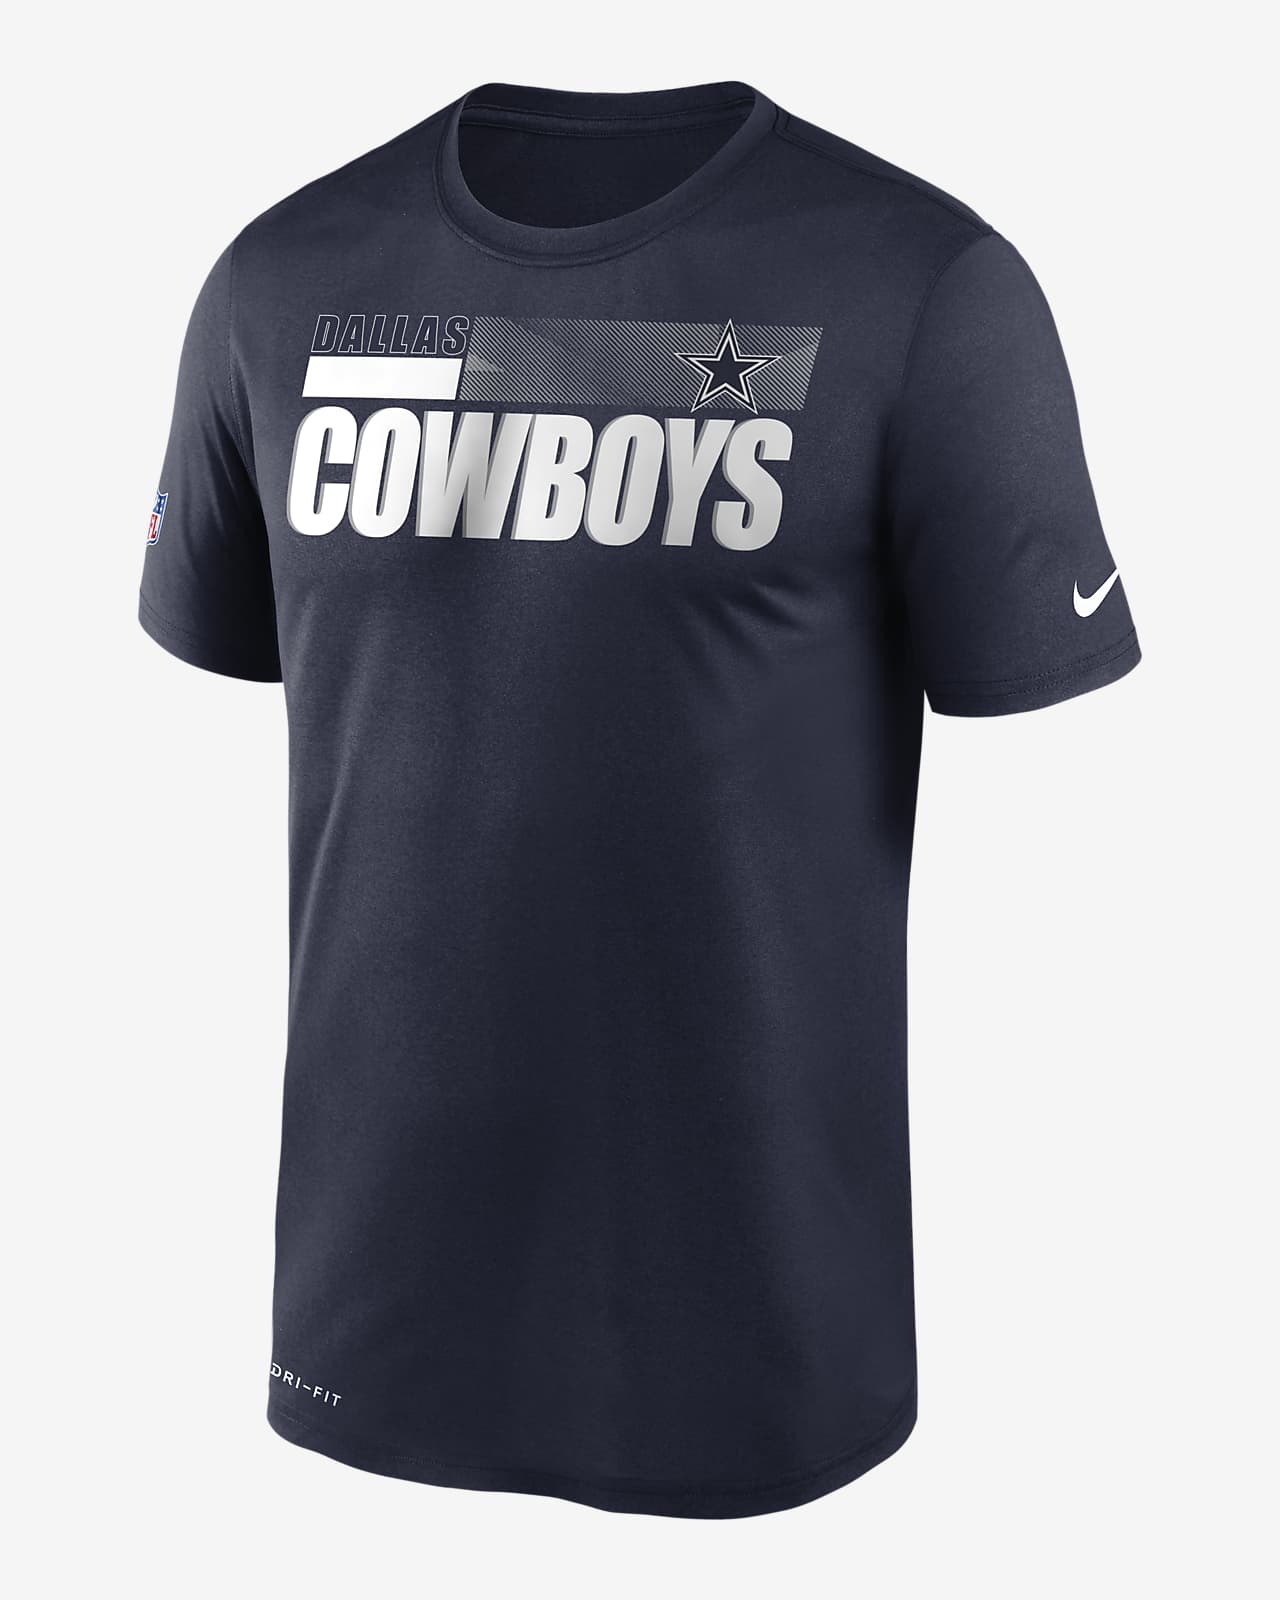 Buy > dallas cowboys nike dri fit shirt > in stock